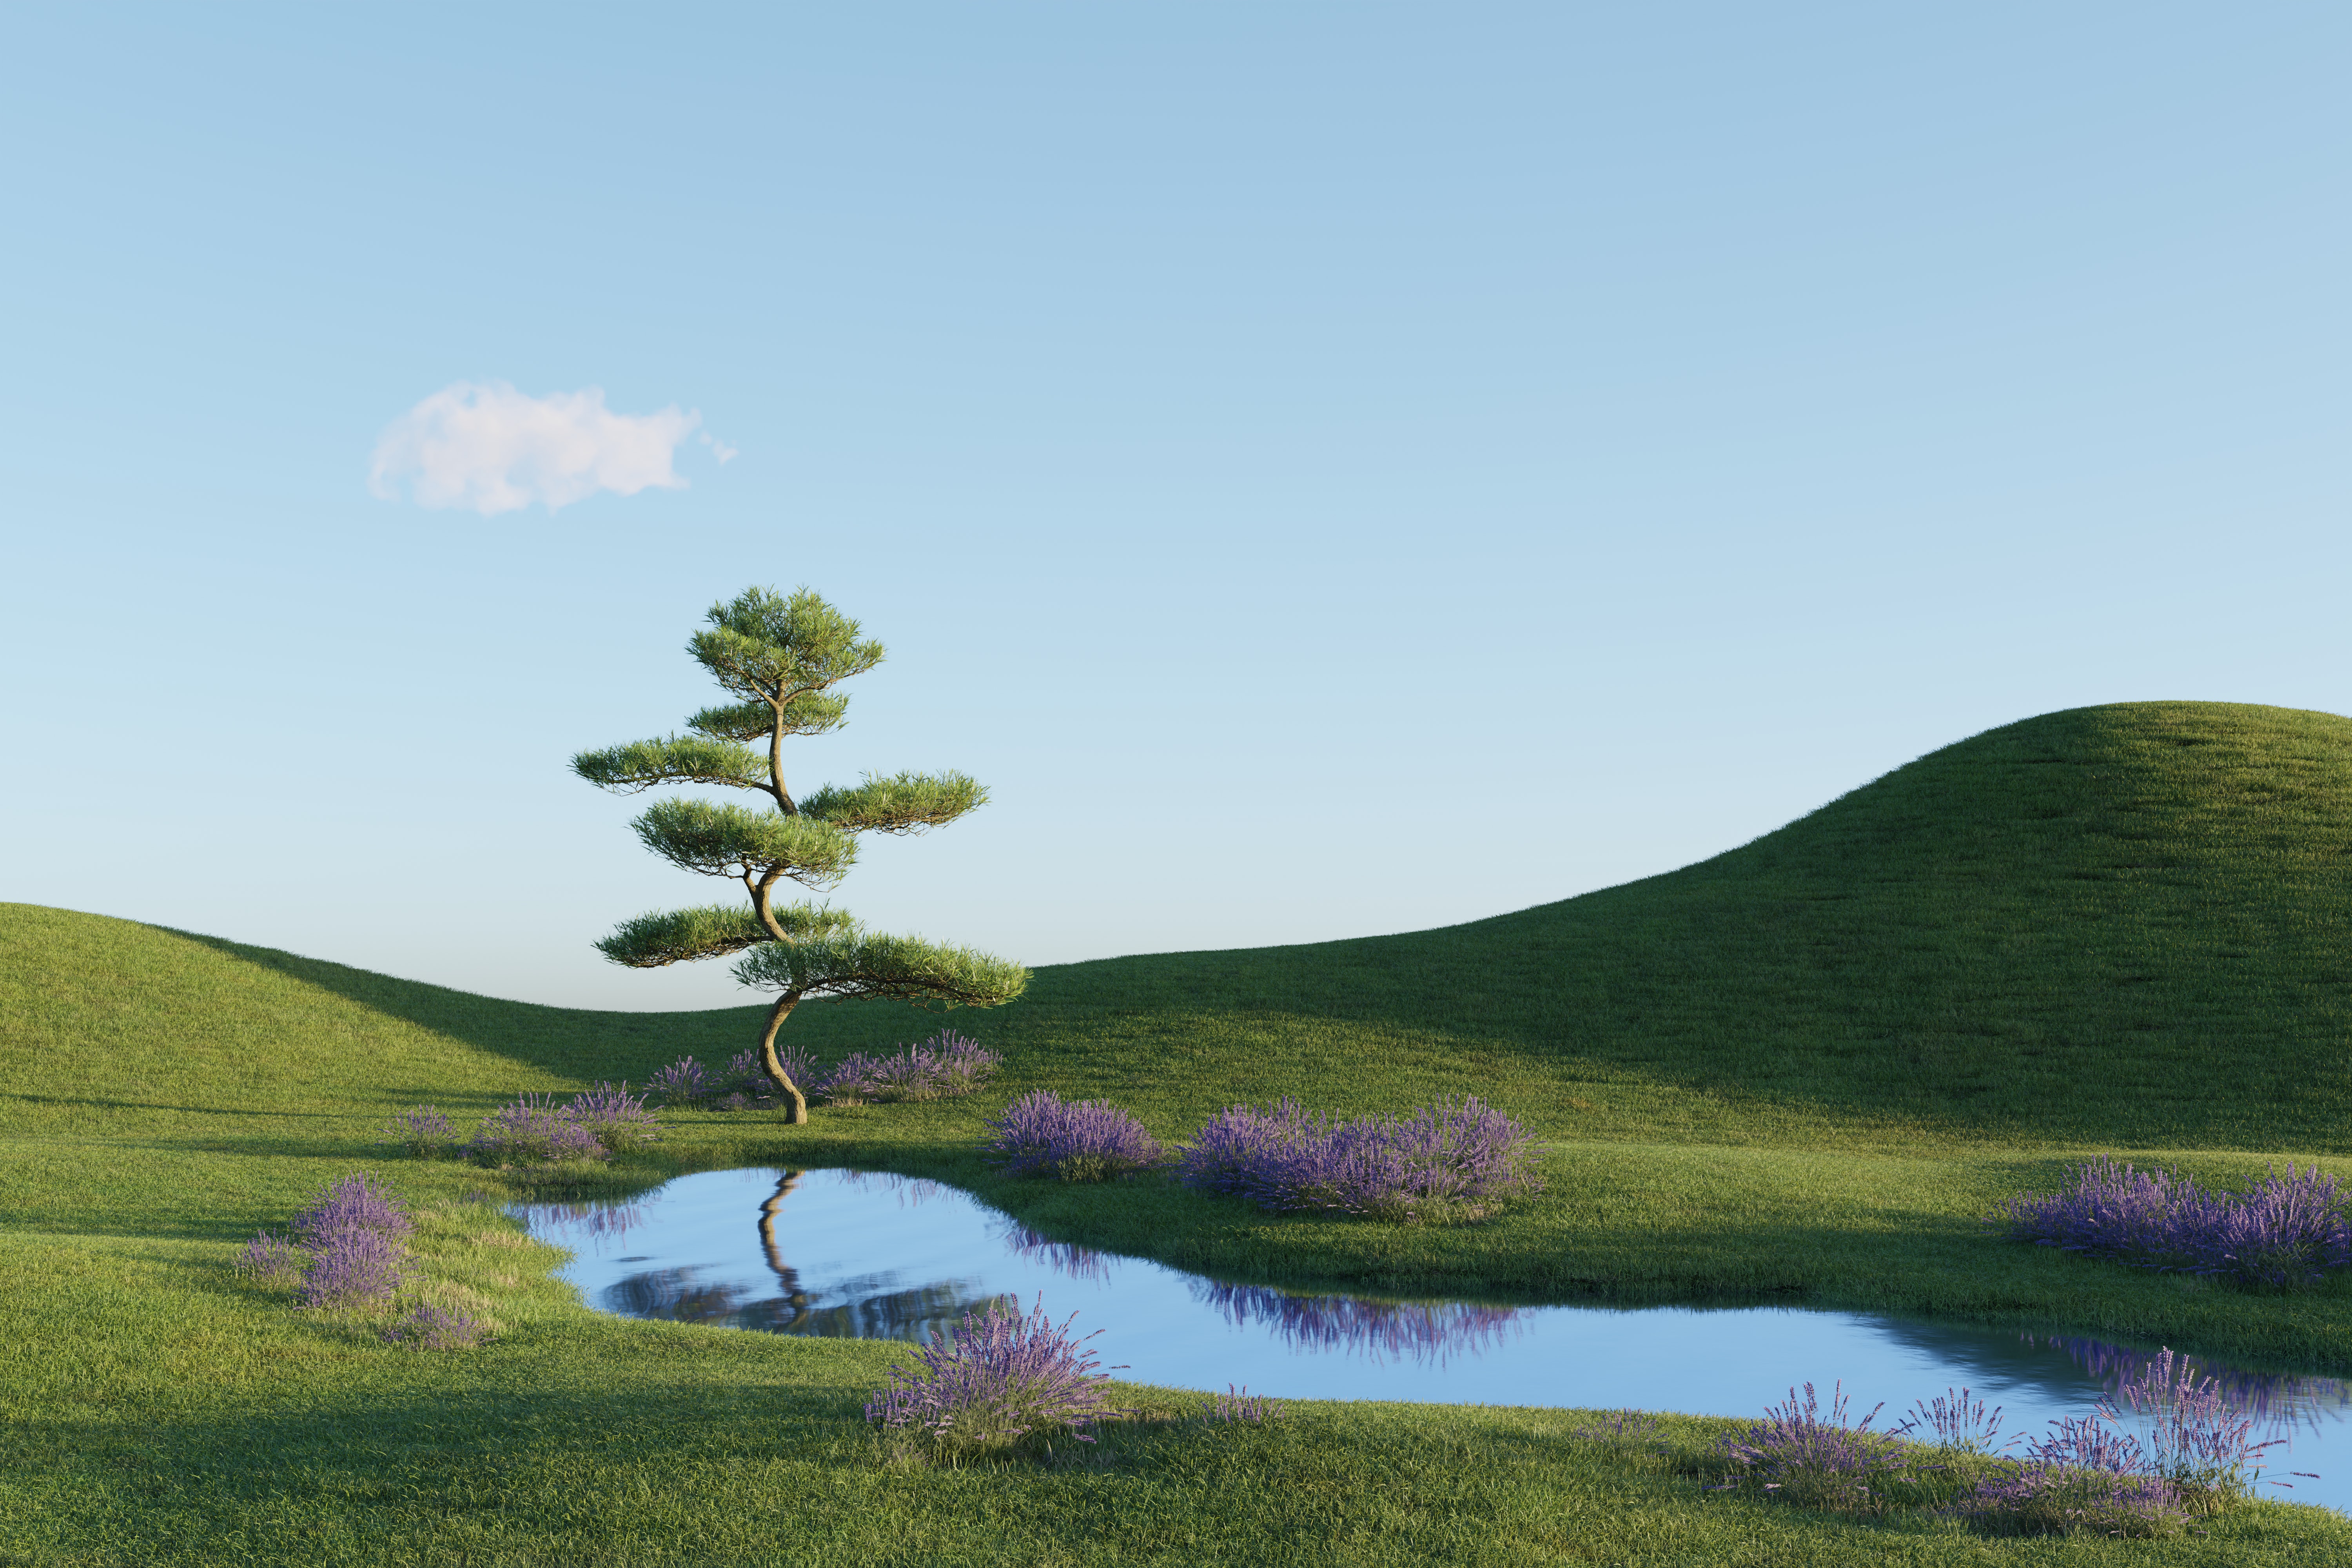 General 6000x4000 digital art artwork CGI nature landscape field trees river reflection water